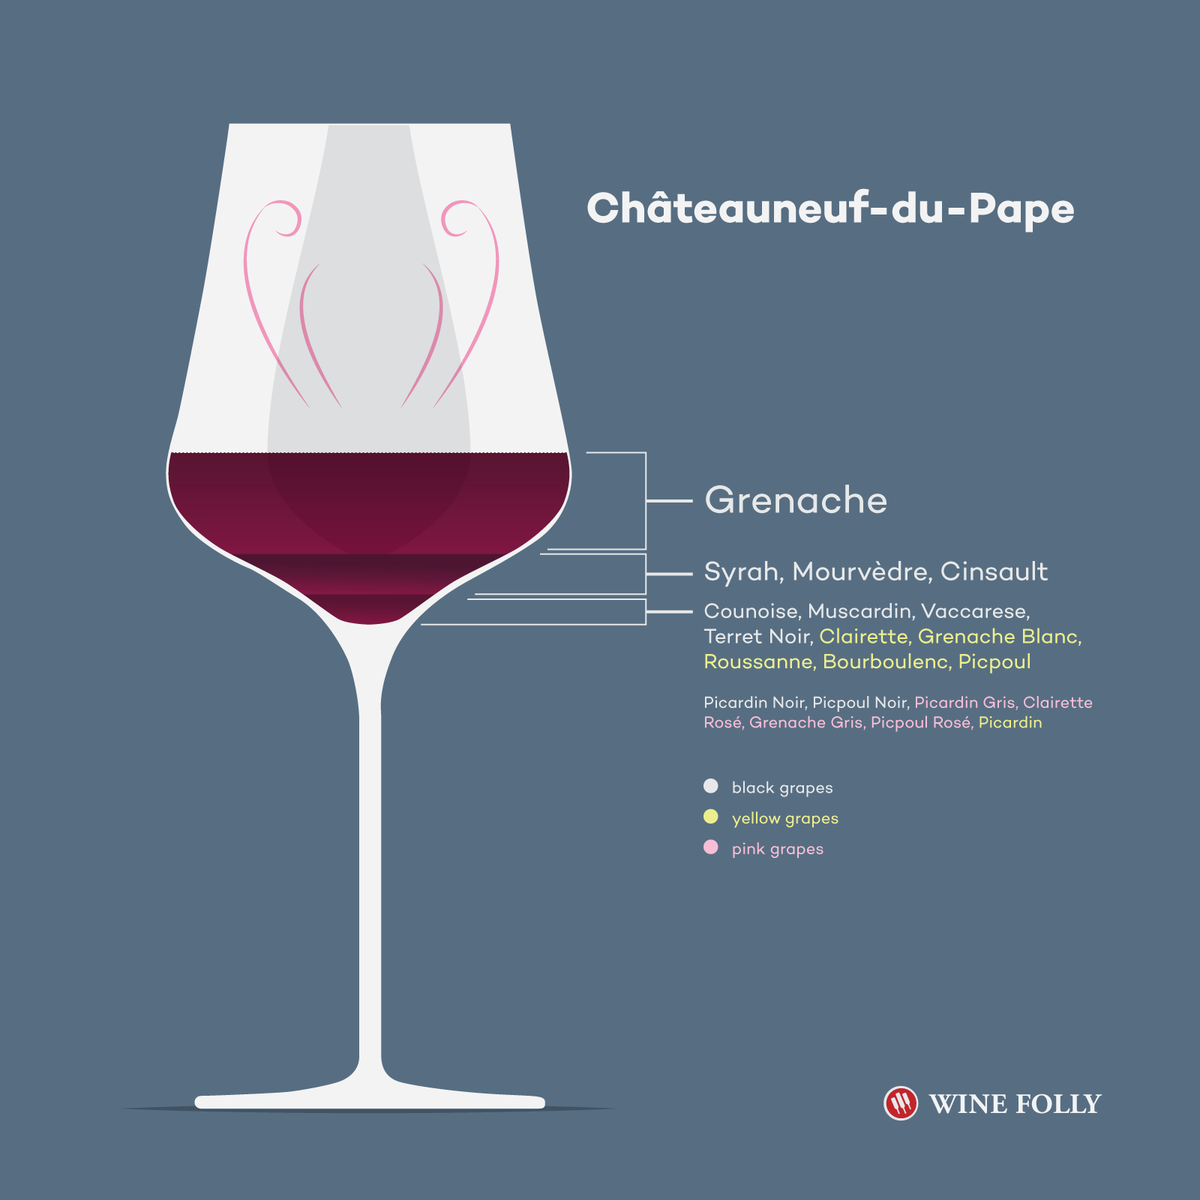 Chateauneuf-du-Pape OfficialGgrapes - Hay 20 - Ilustración de vidrio de Wine Folly